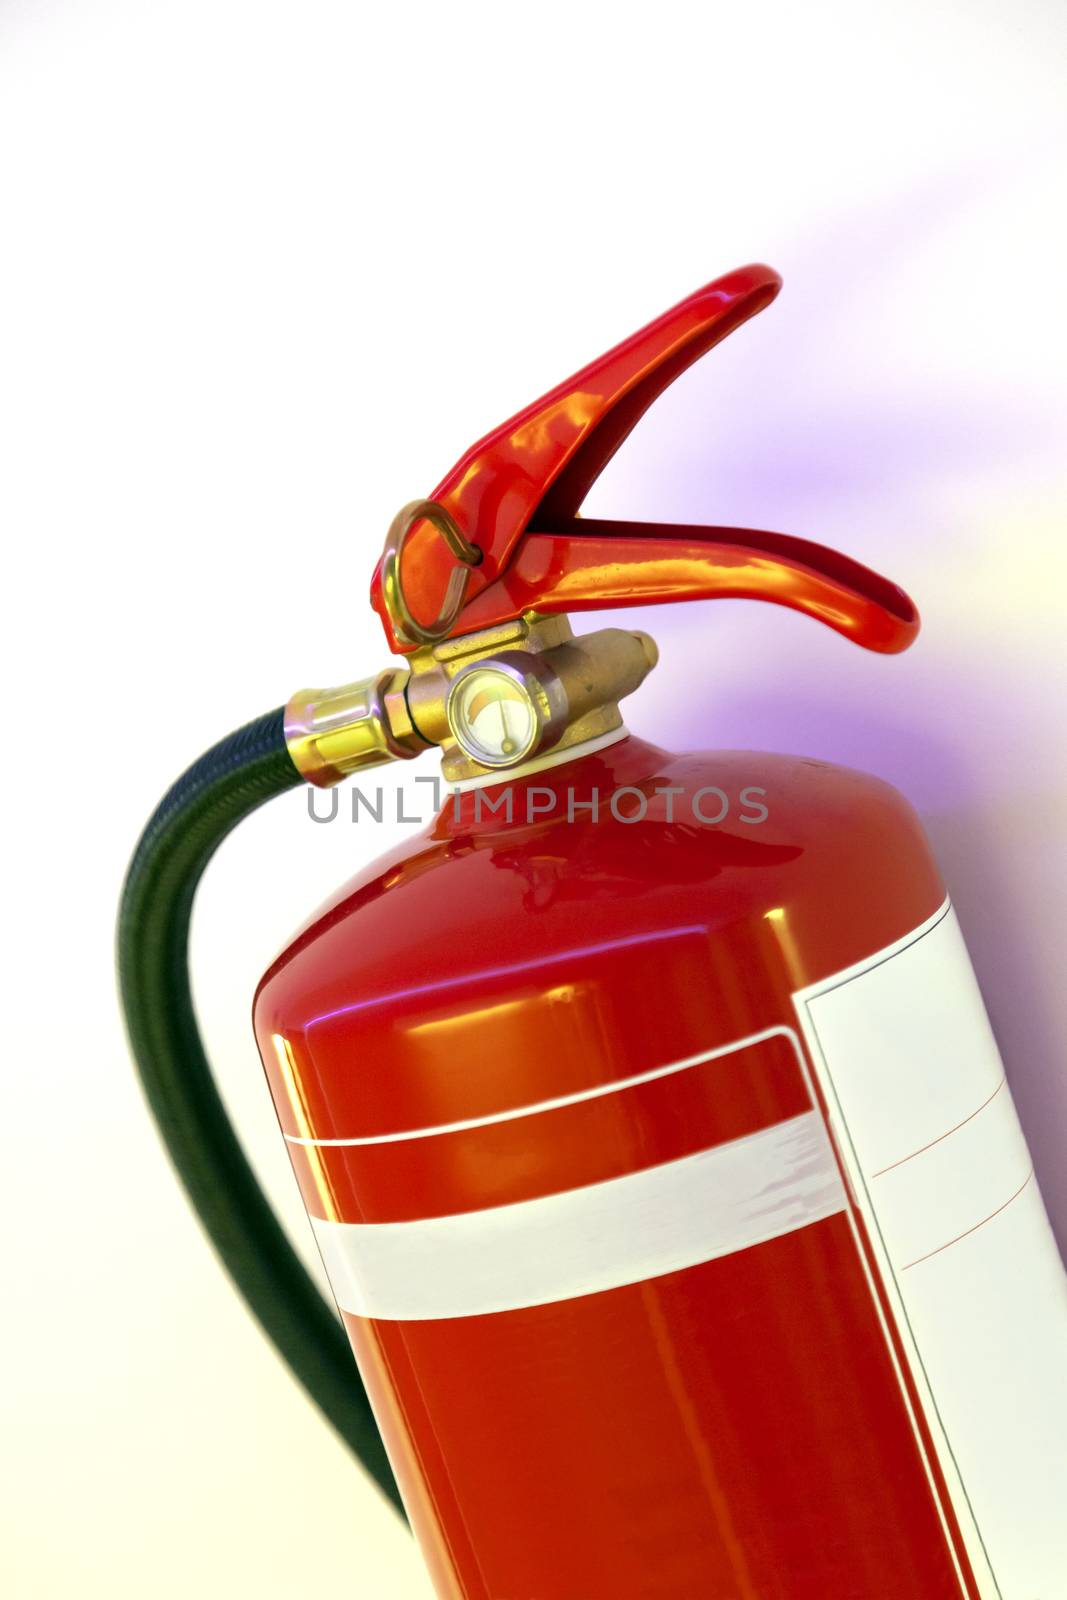  fire extinguisher by carloscastilla